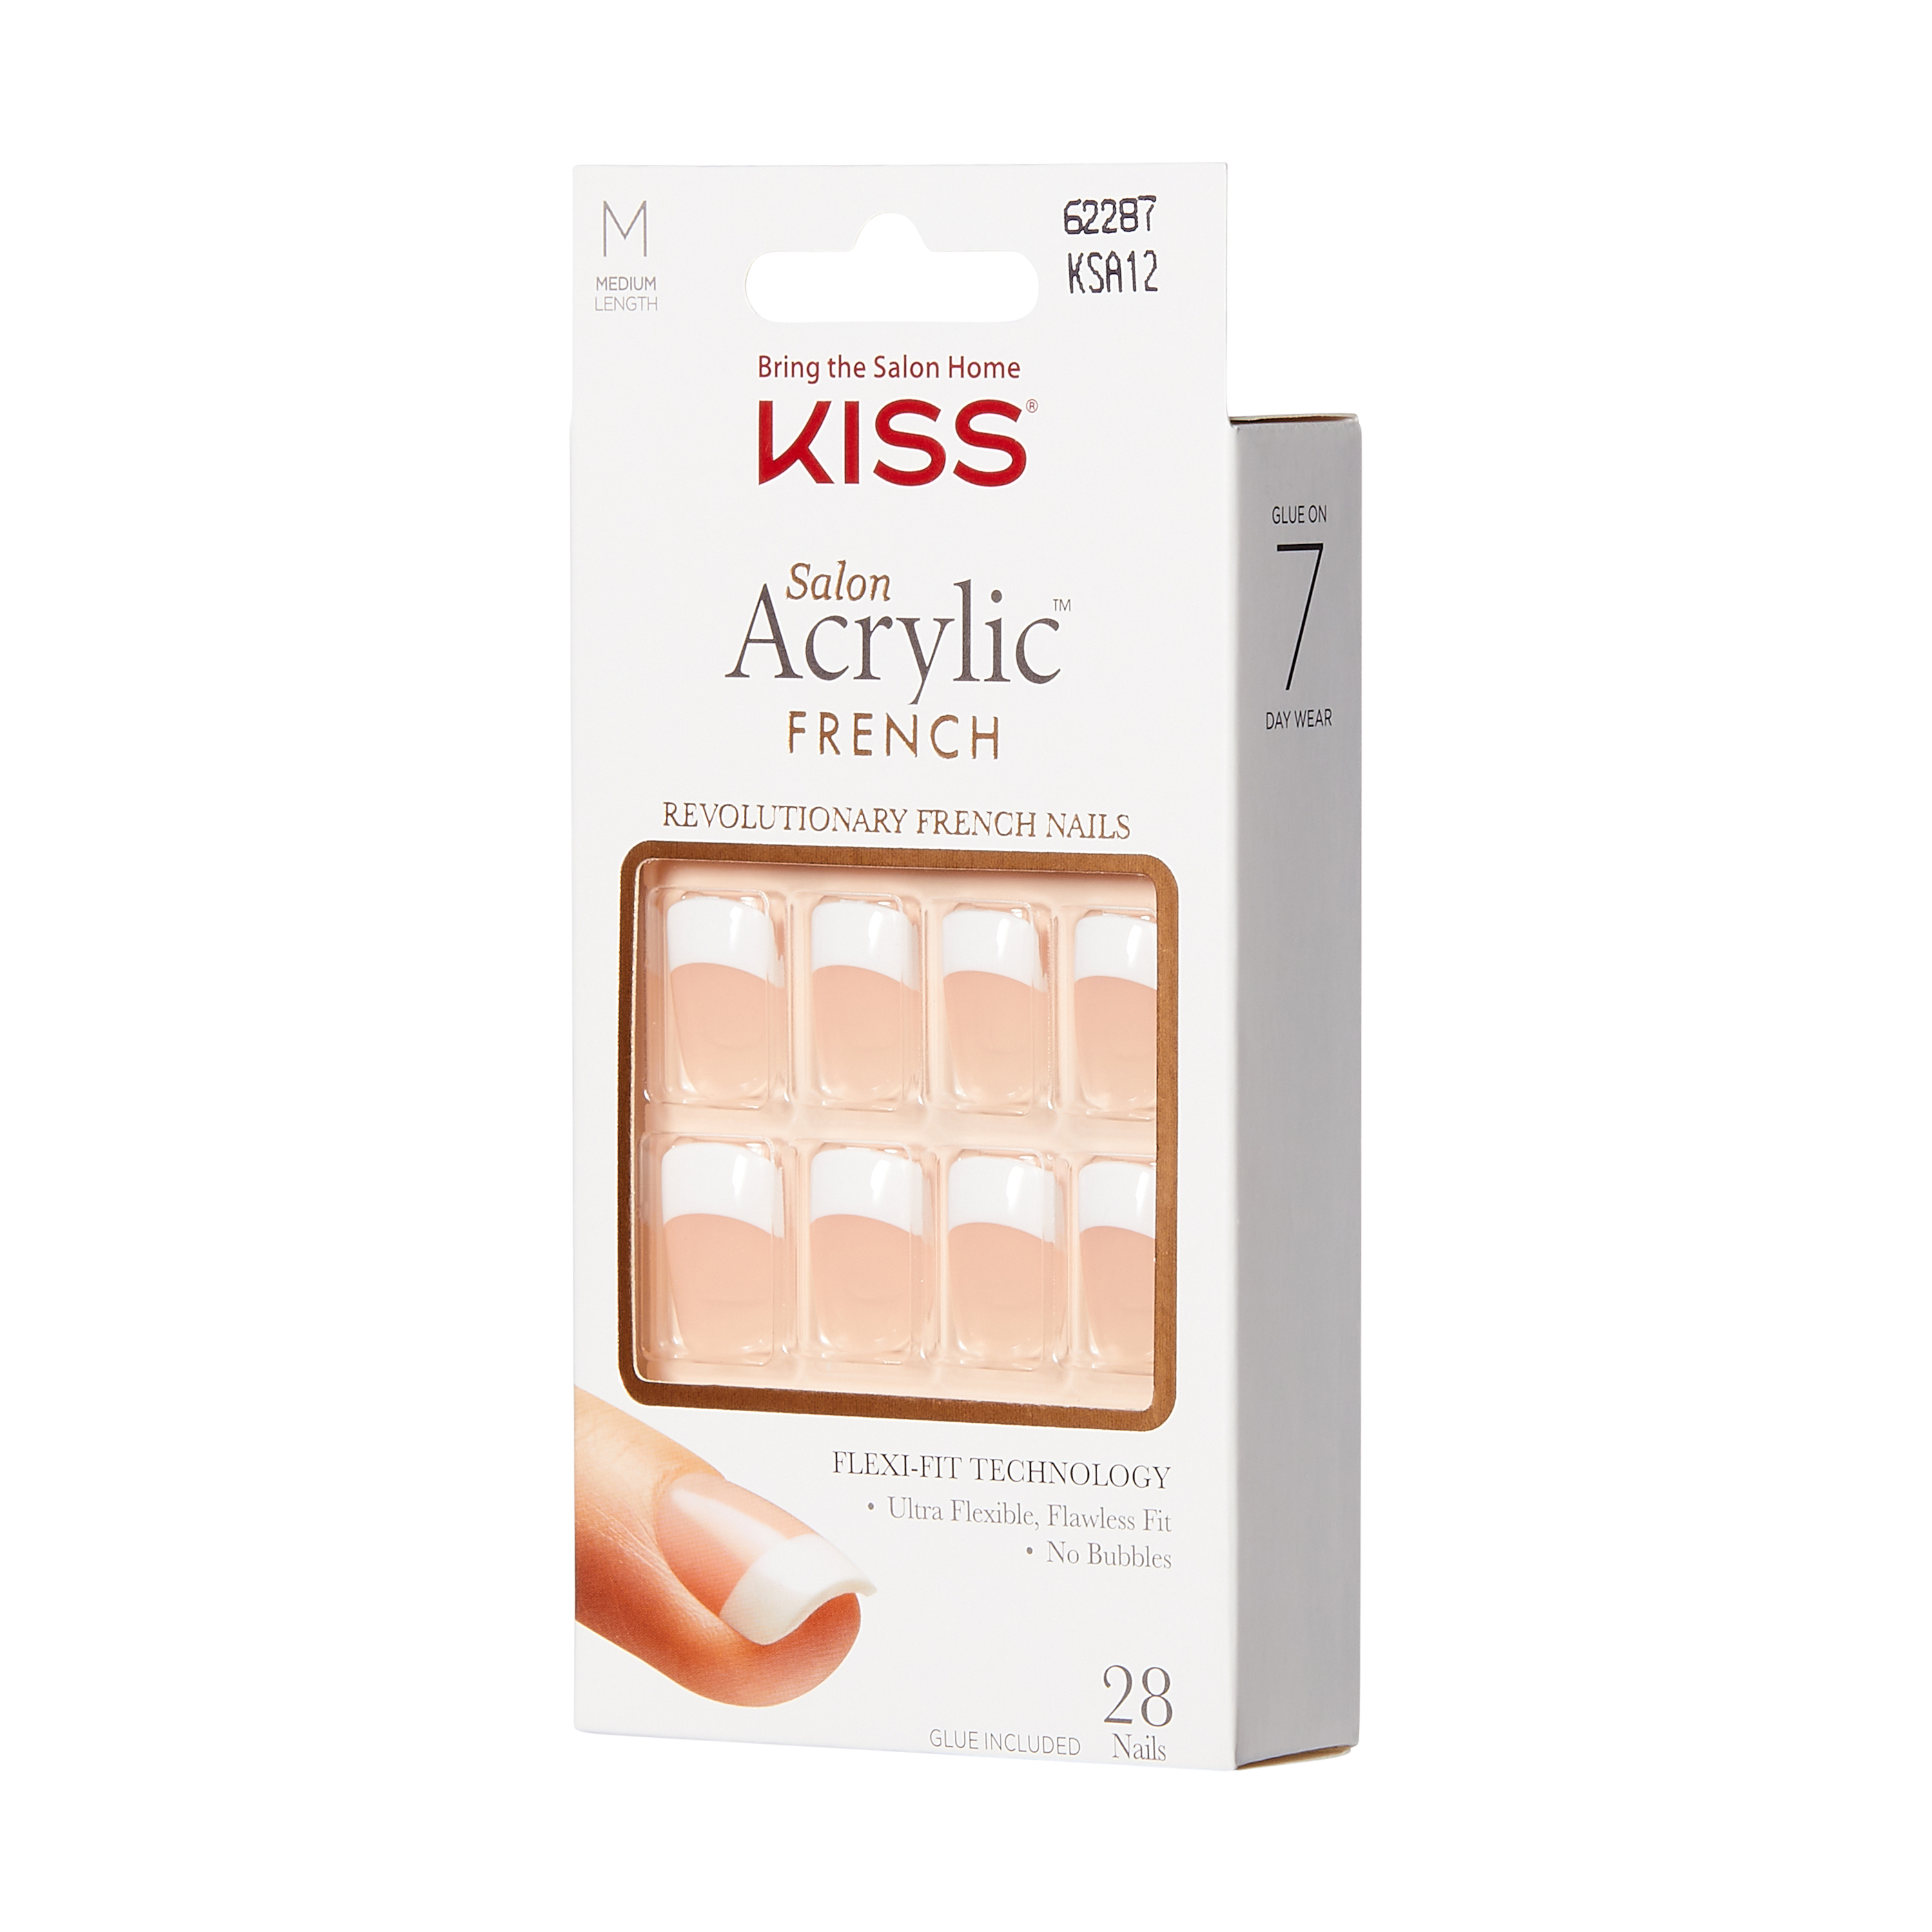 KISS Salon Acrylic French Nail Kit - Rumour Mill - Walmart.com